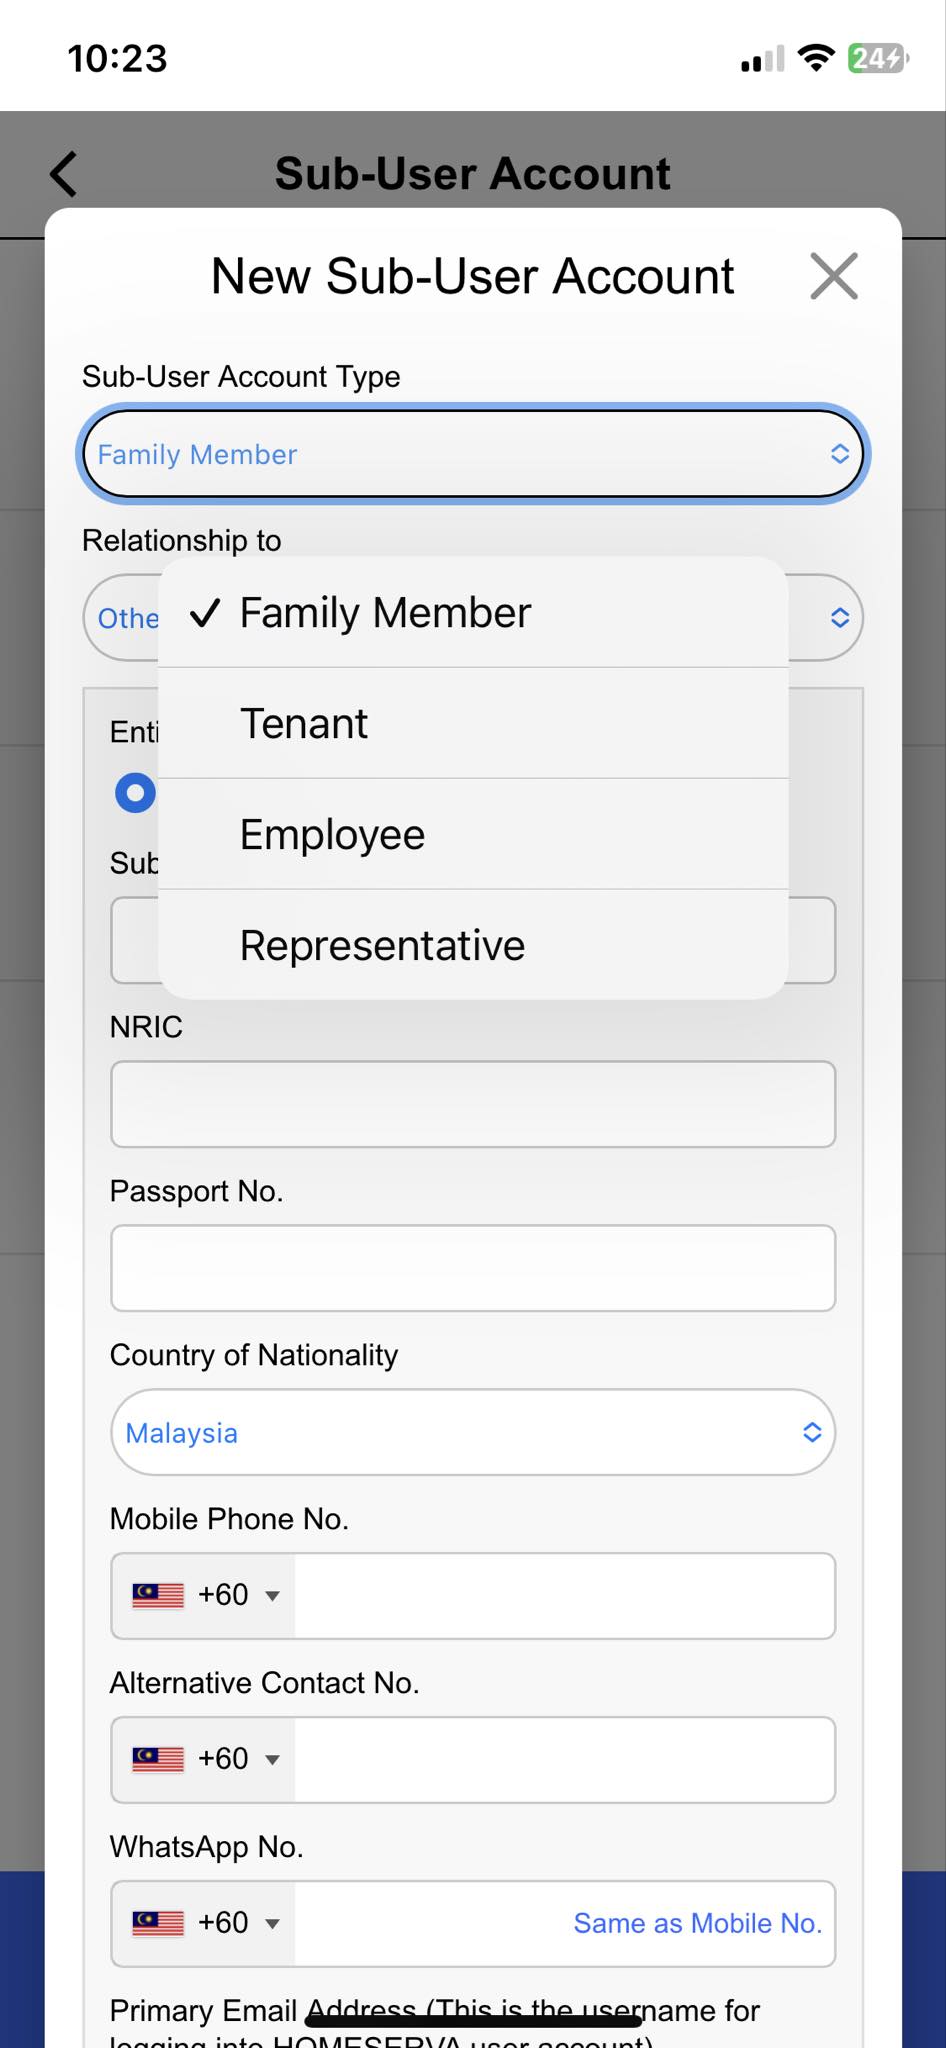 Sub-User Accounts App Screenshot - Select Card Access Type